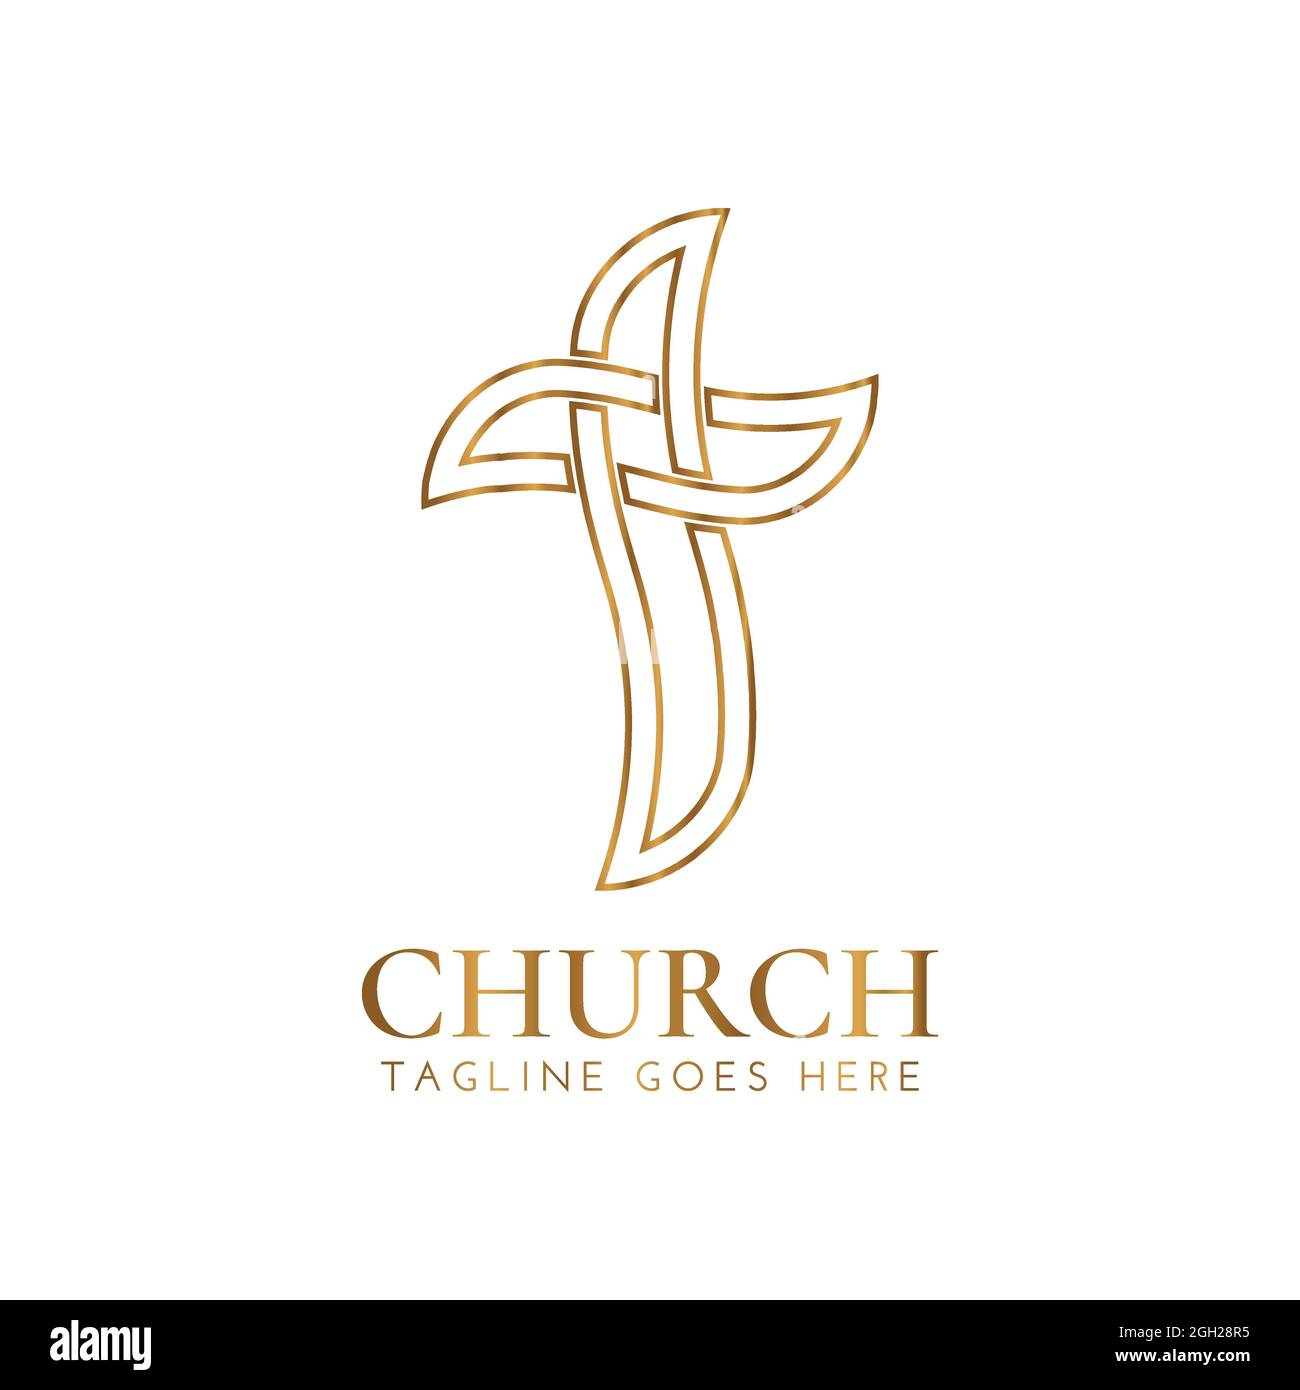 Christian Church Outline Gold Logo Design with Cross Stock Vector